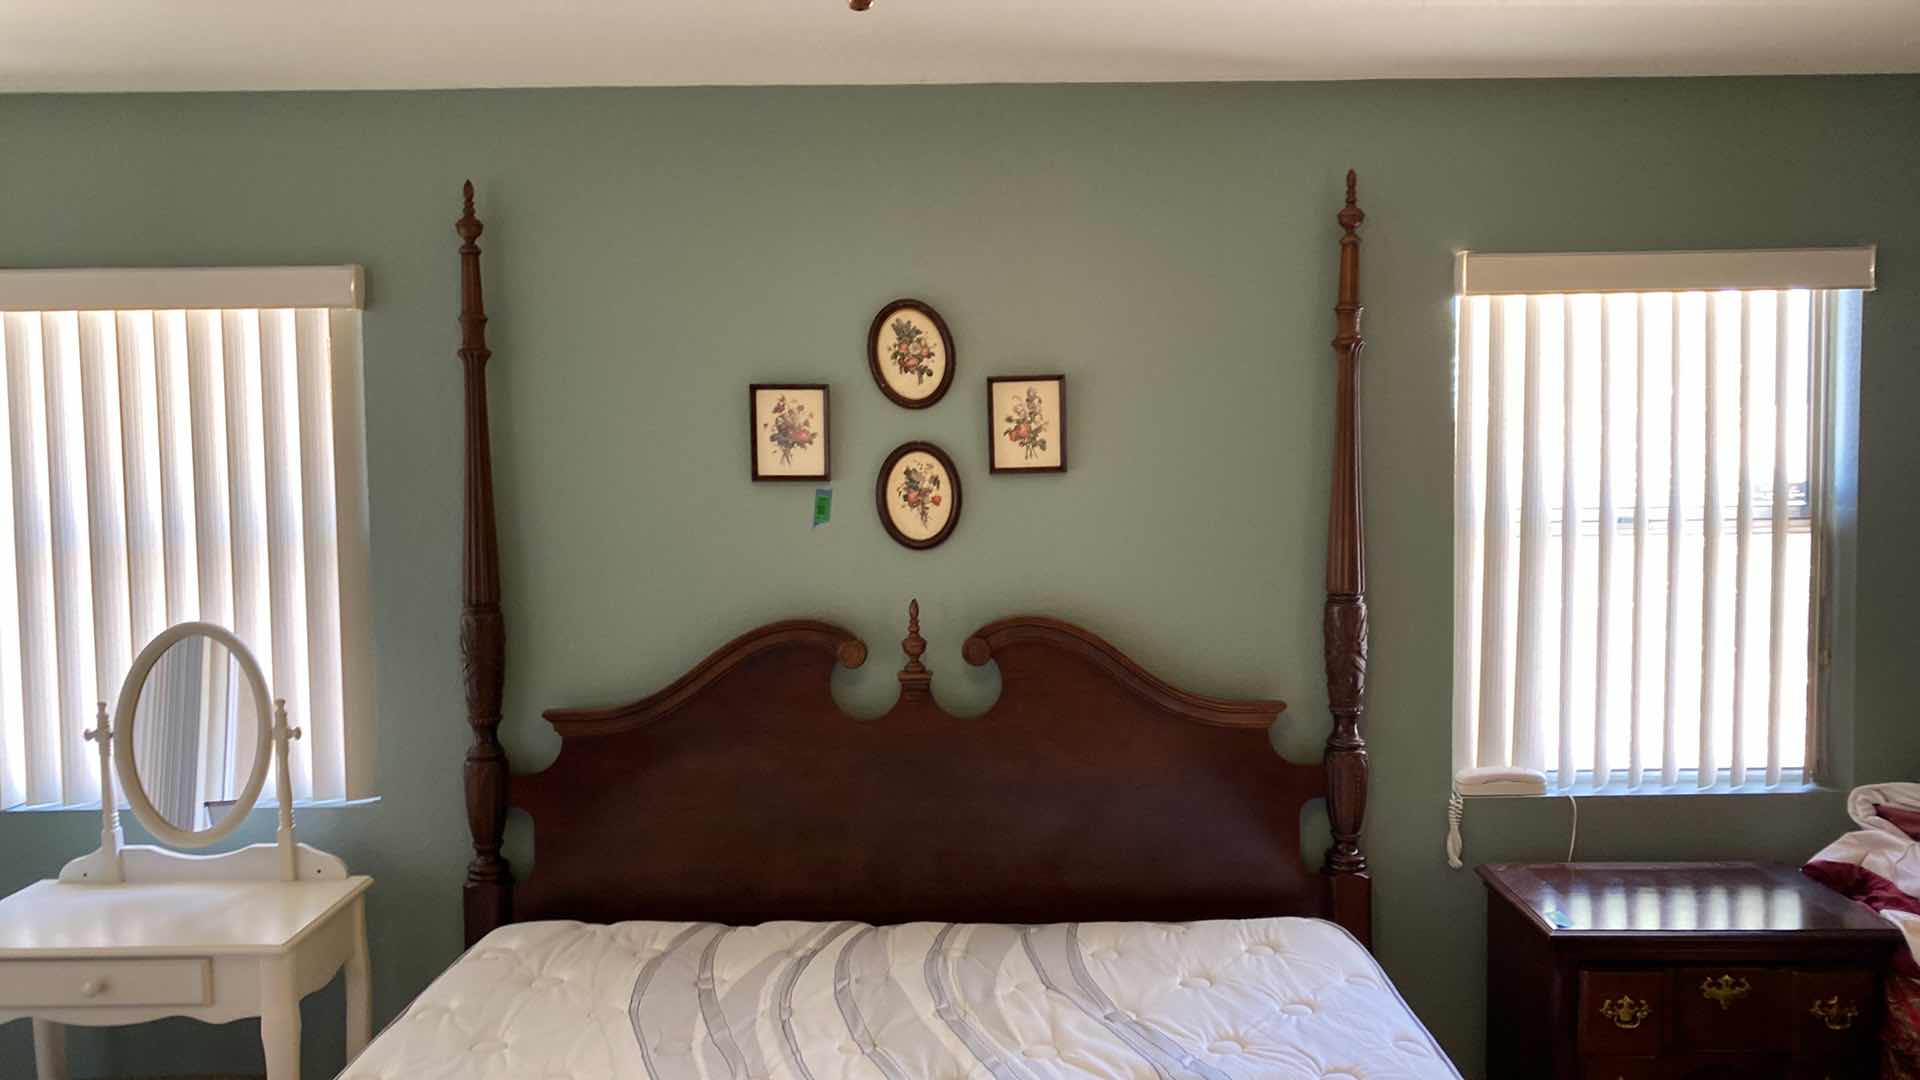 Photo 3 of CHERRY BED FRAME AND MATTRESS CA KING SERTA PERFECT SLEEPER HEADBOARD 78“ x 87“